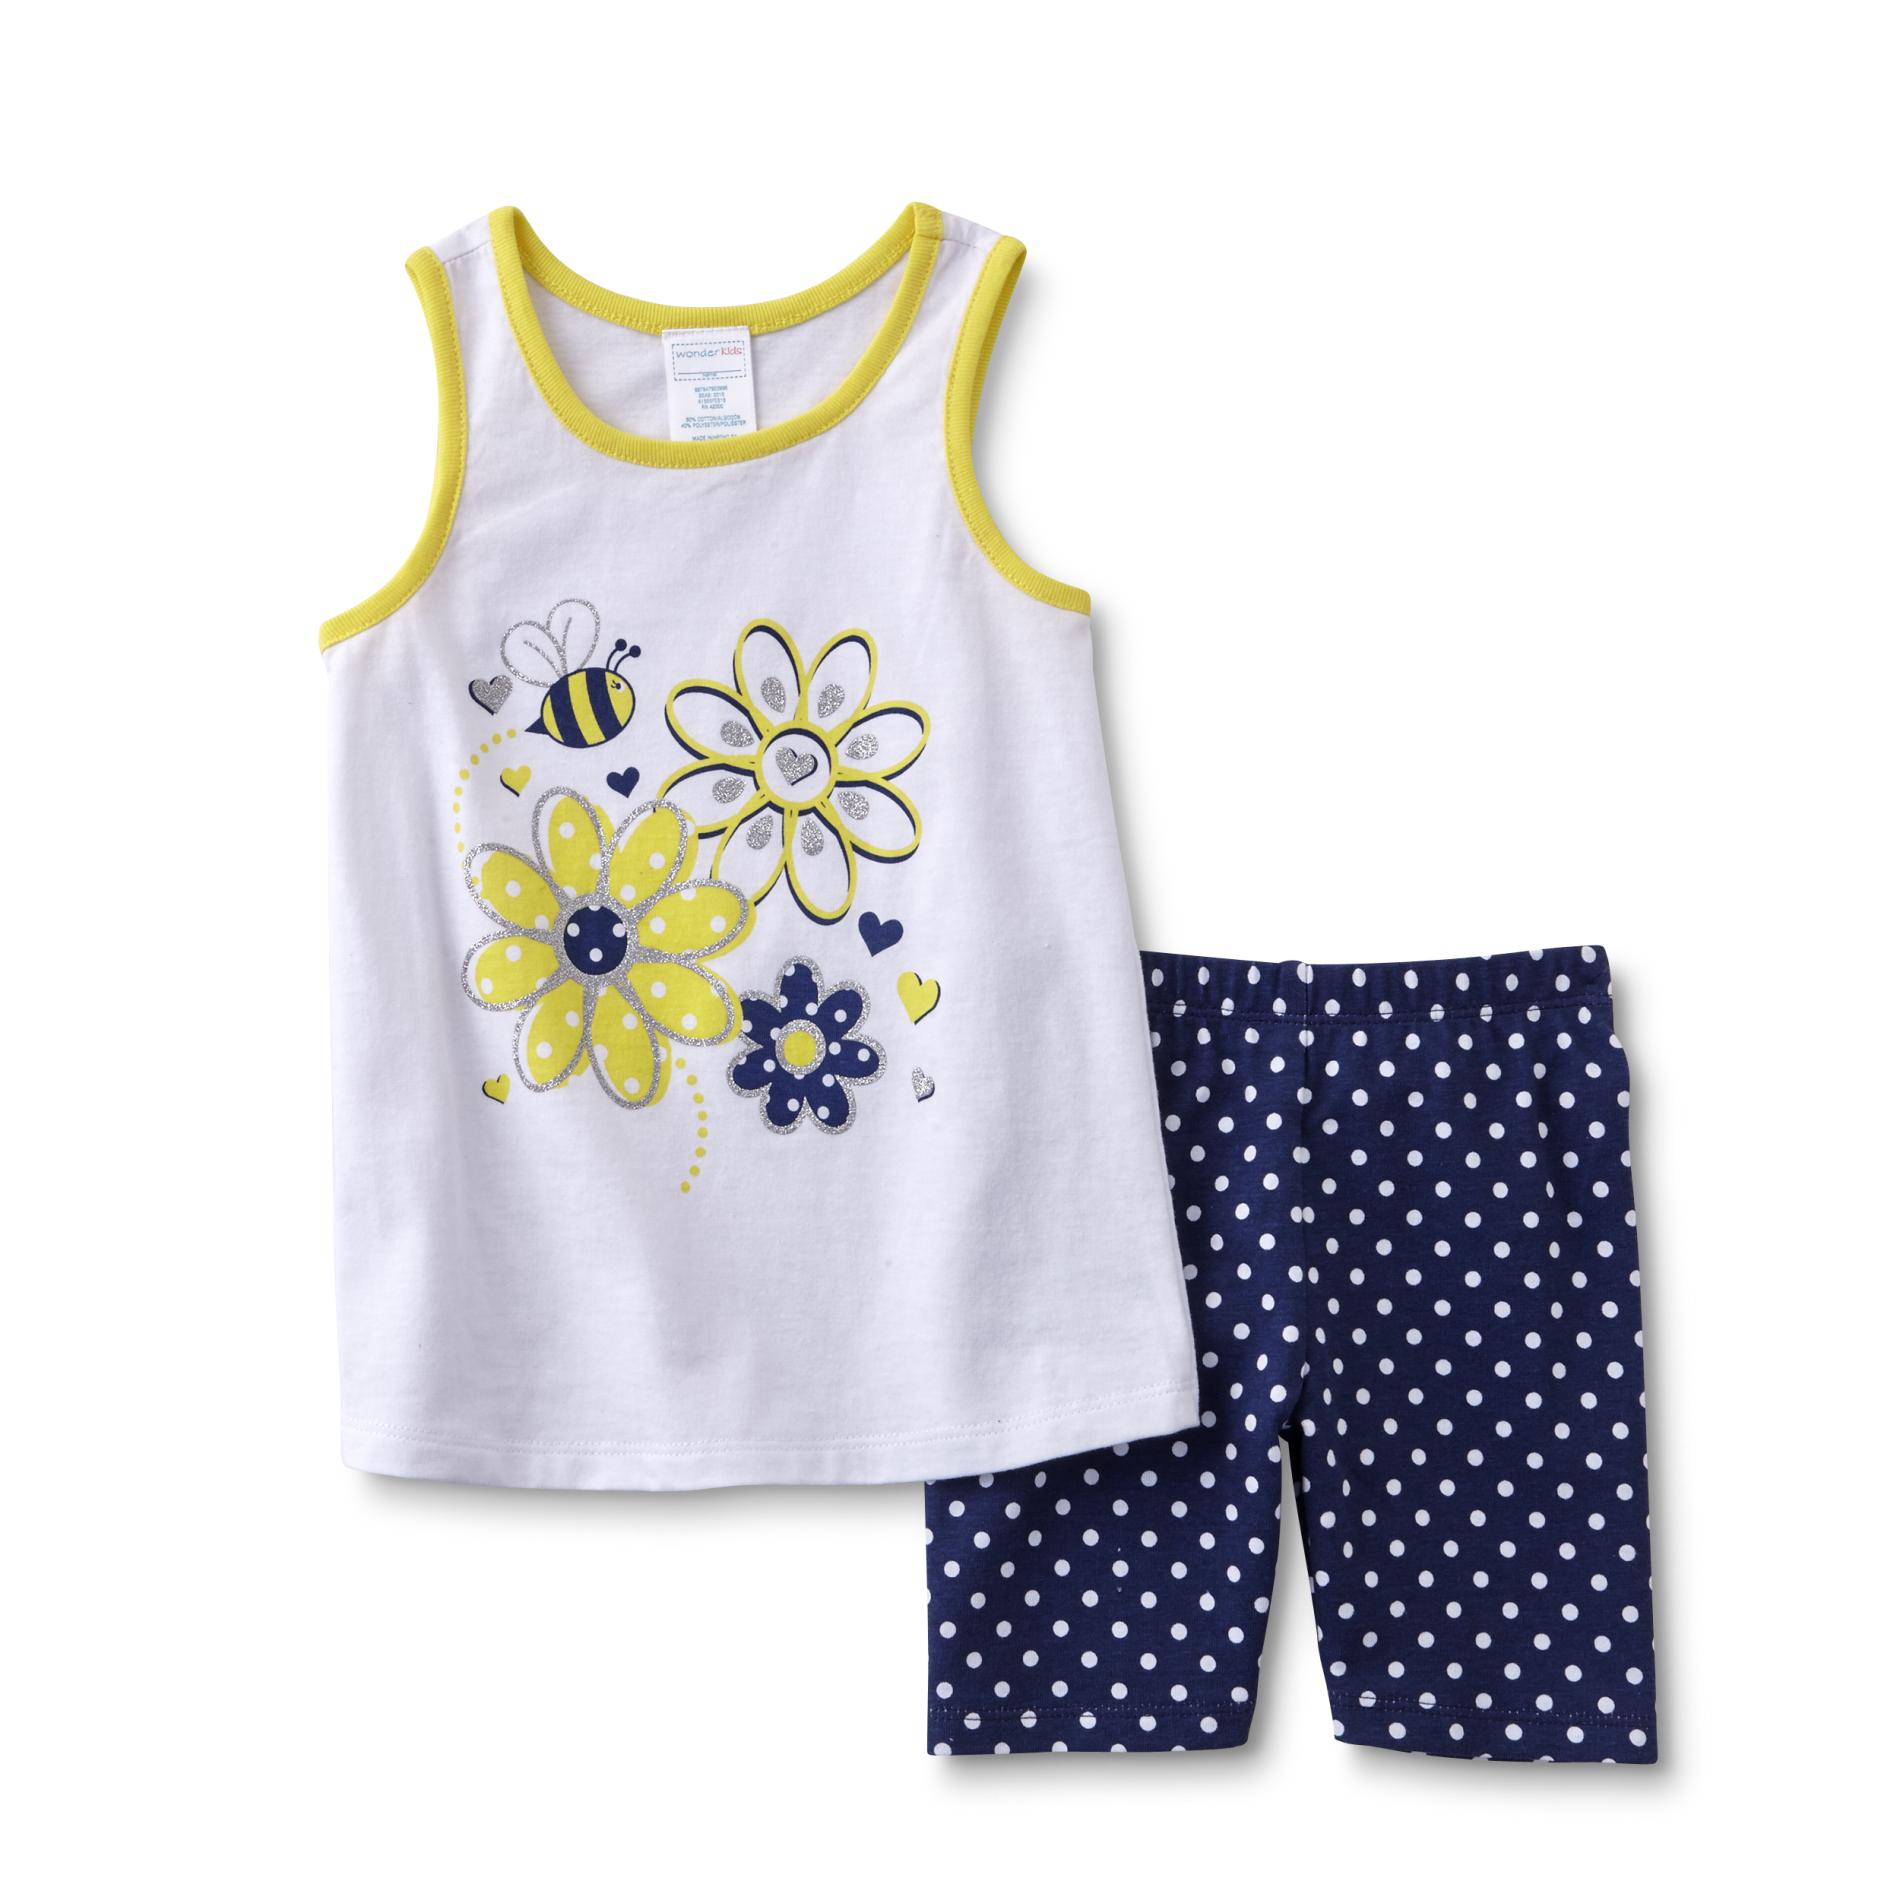 Infant & Toddler Girl's Tank Top & Shorts - Floral